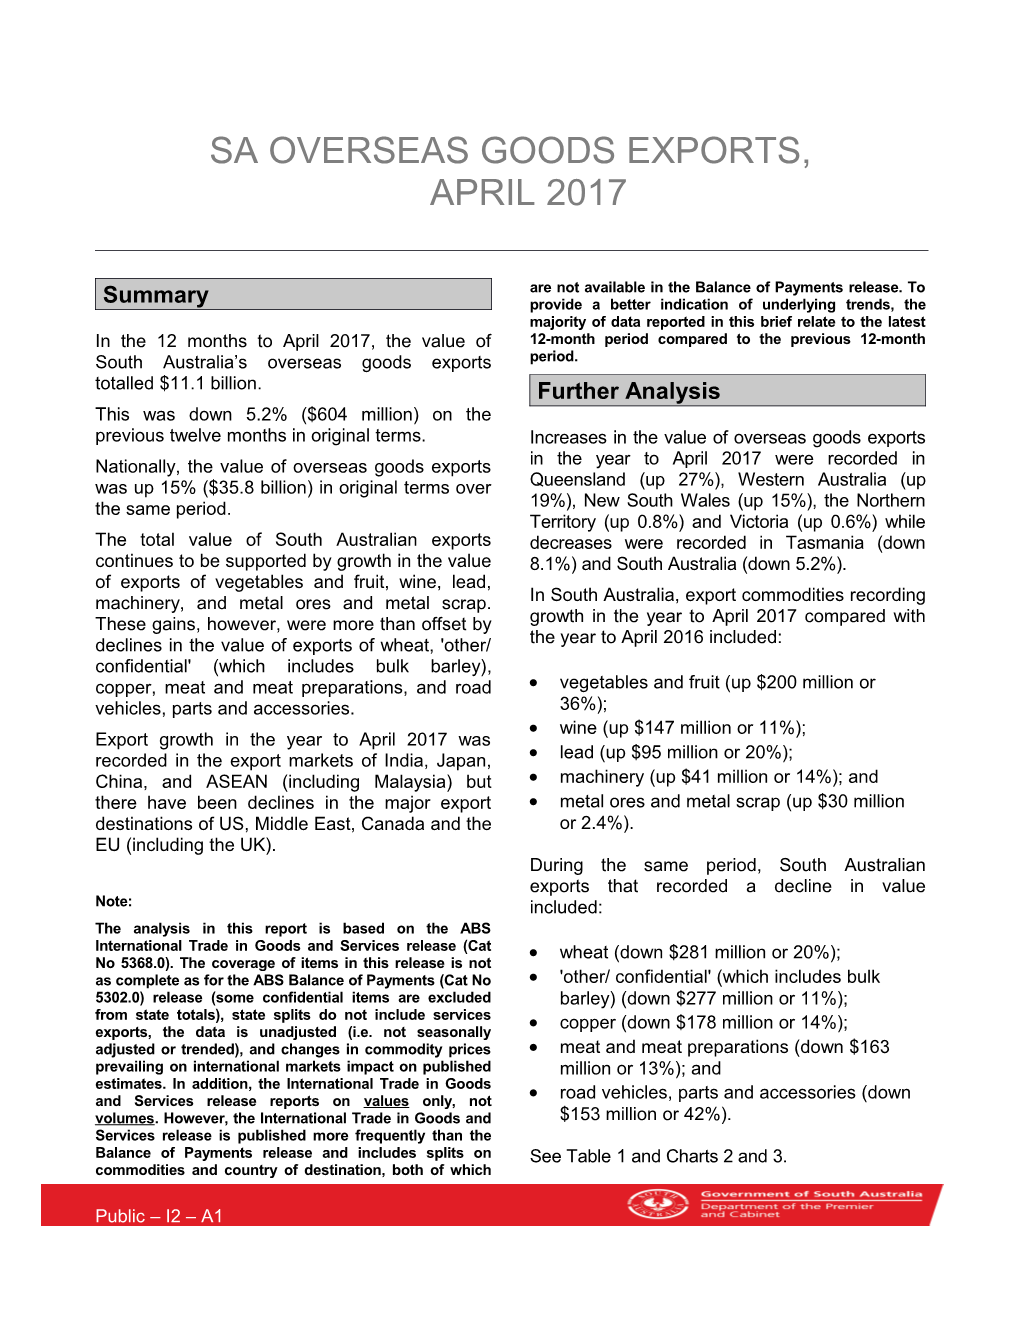 SA OVERSEAS GOODS EXPORTS,April 2017